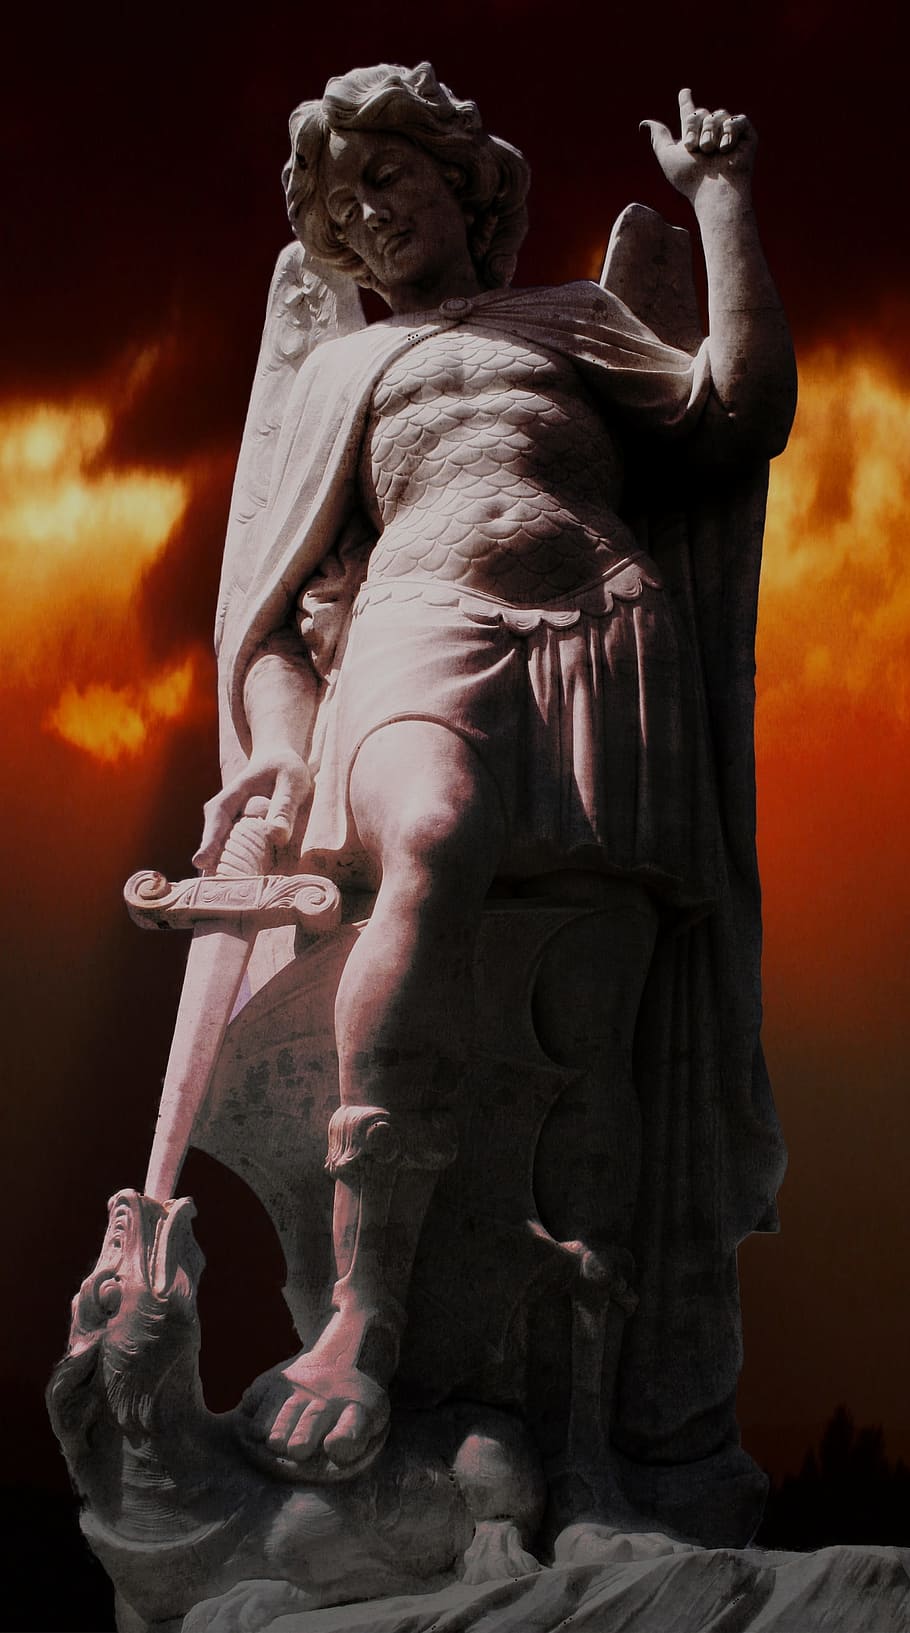 gray, concrete, sculpture, black, orange, background, statue, archangel michael, dragon sword, cemetery